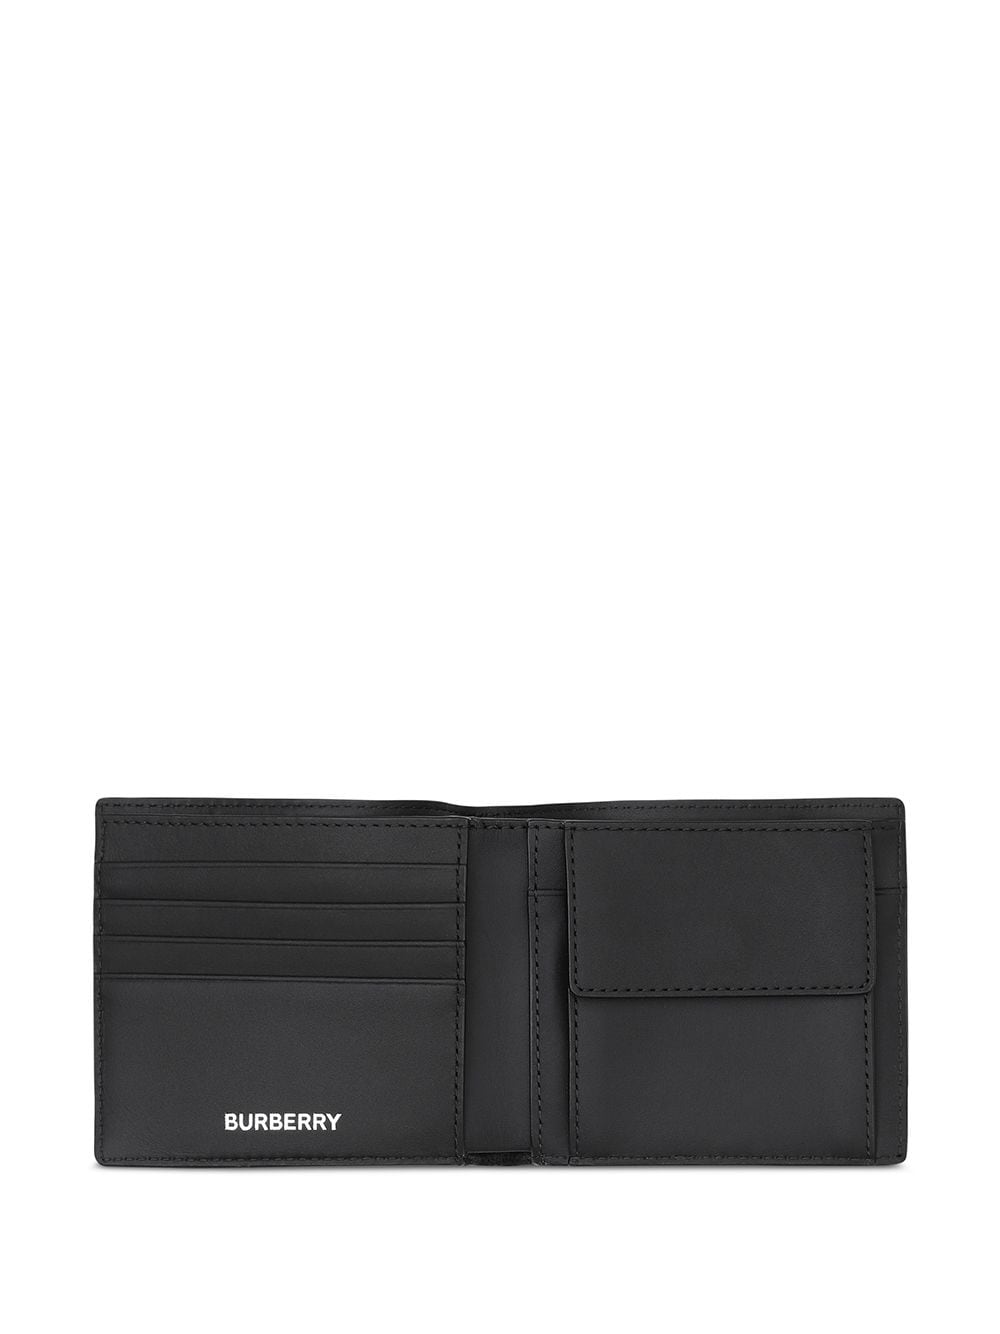 фото Burberry бумажник с логотипом